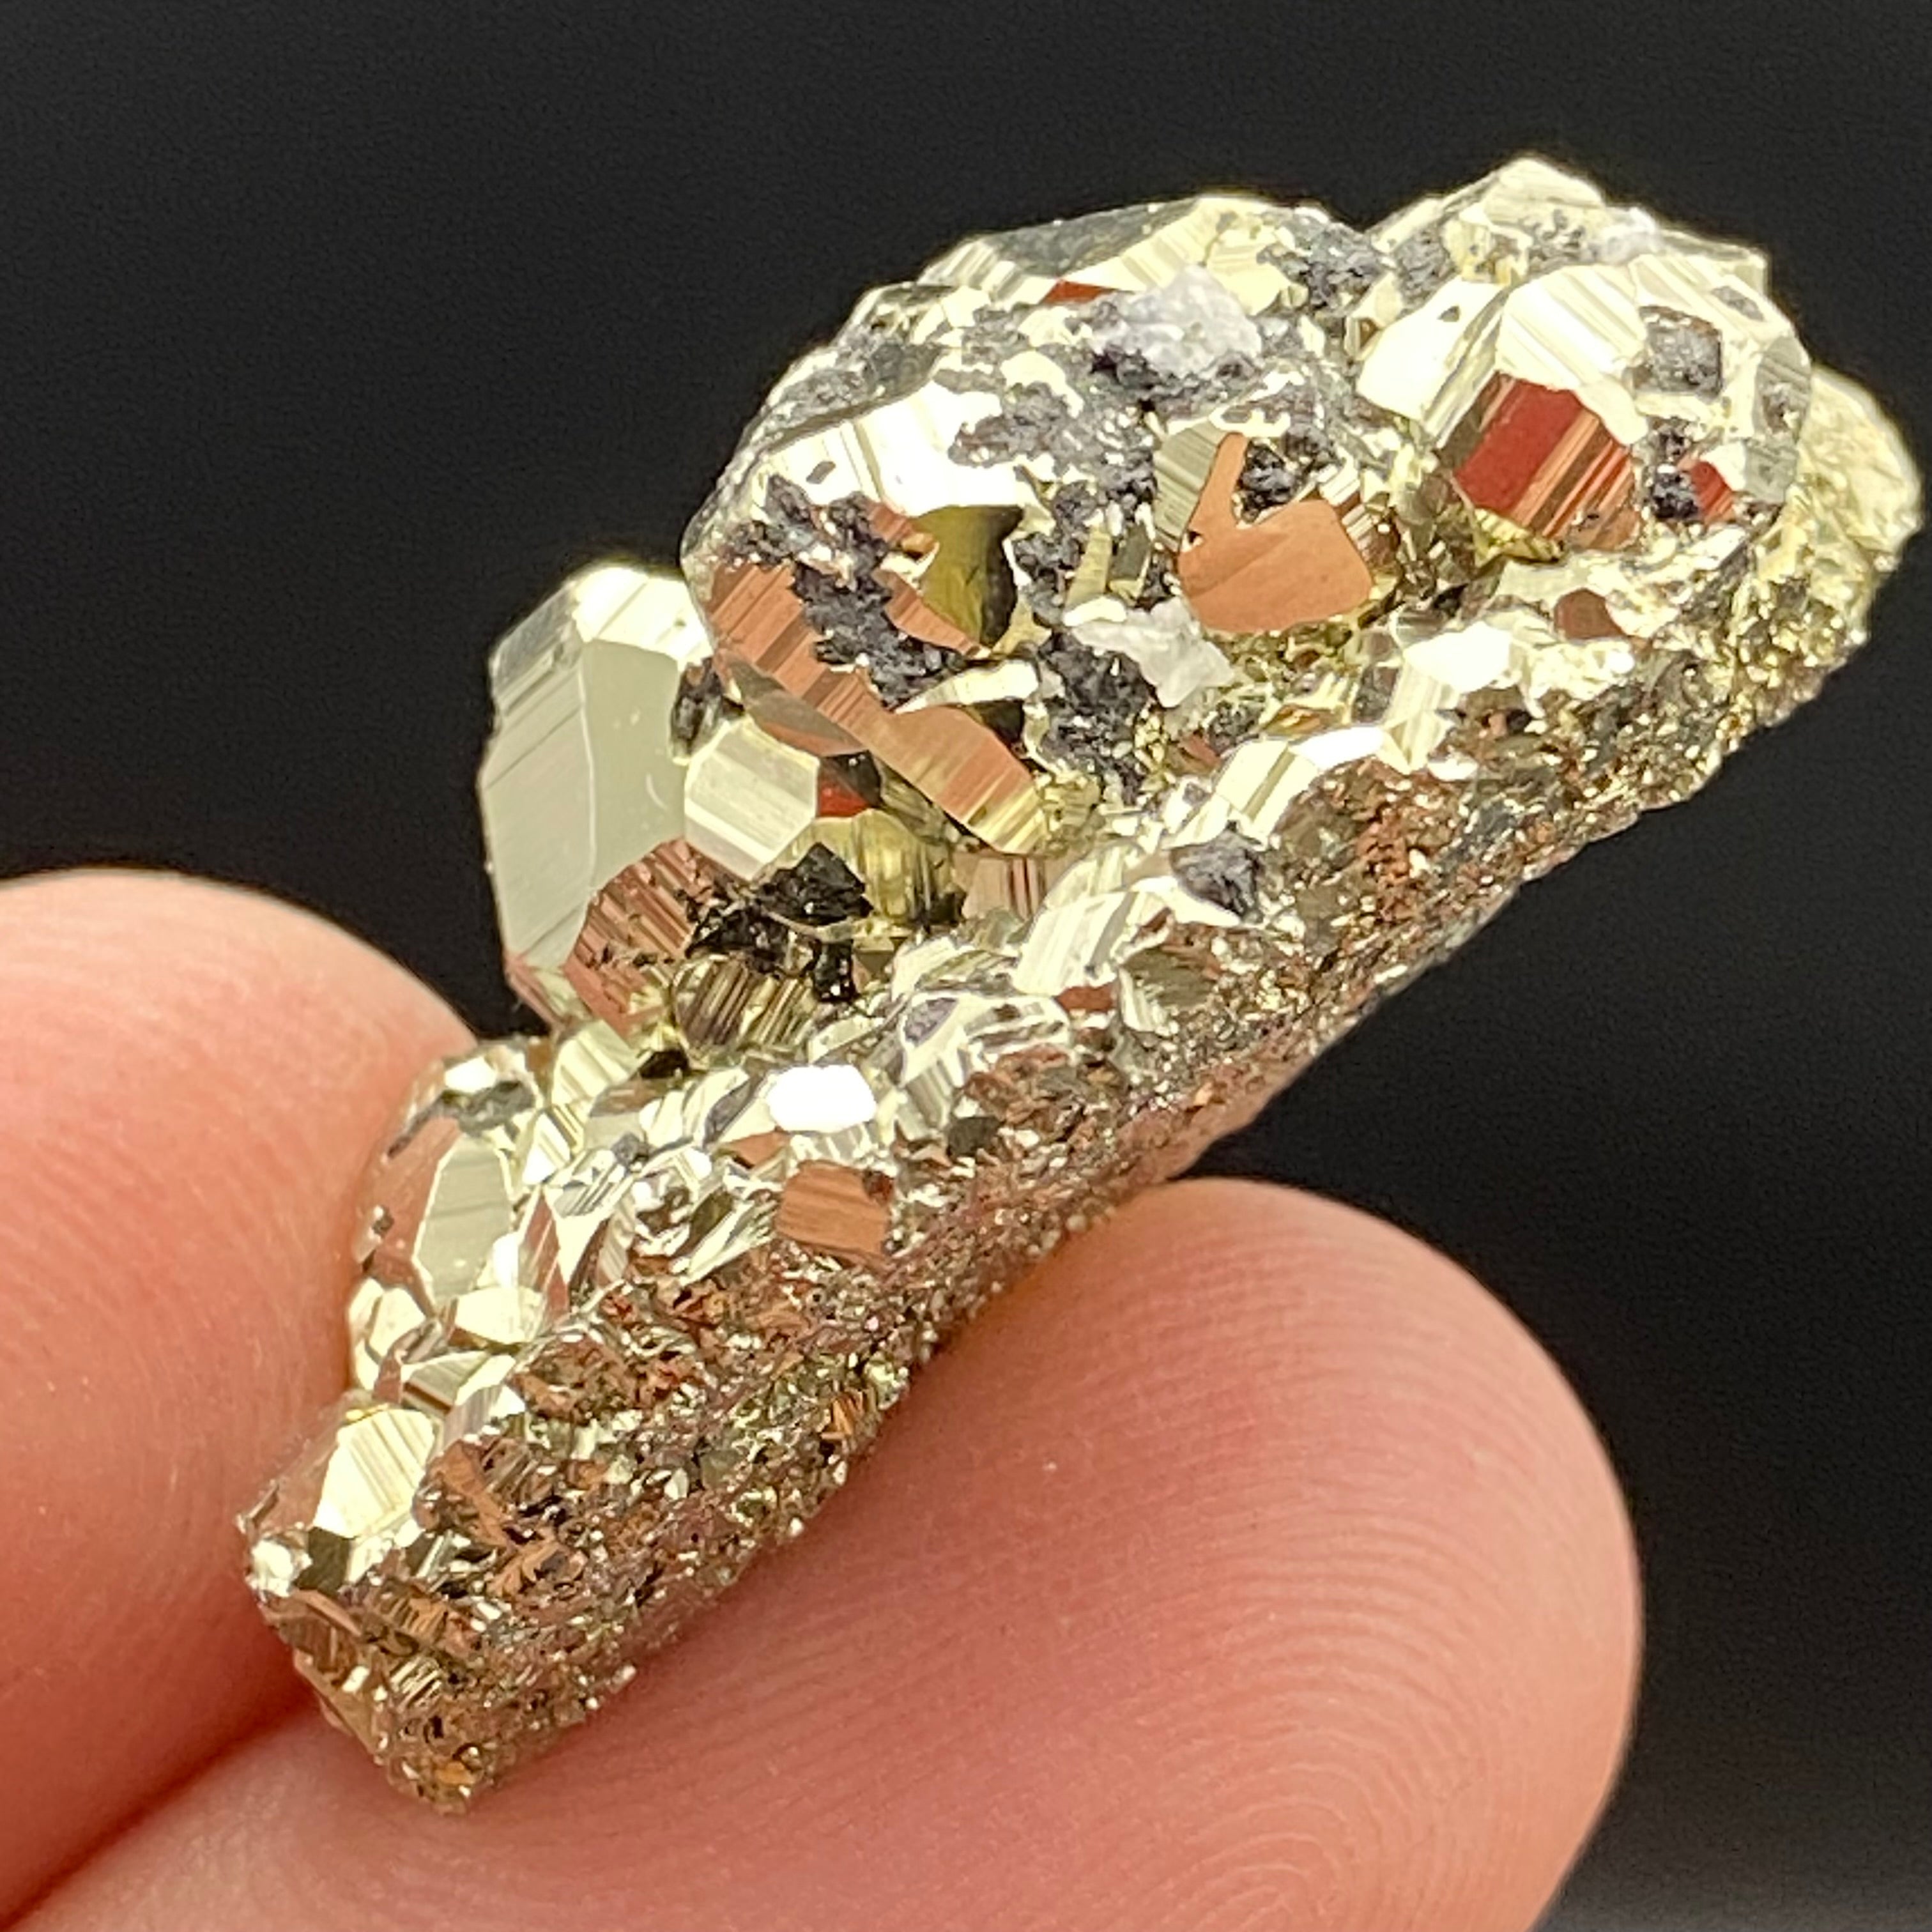 Peruvian Pyrite Crystal - 075